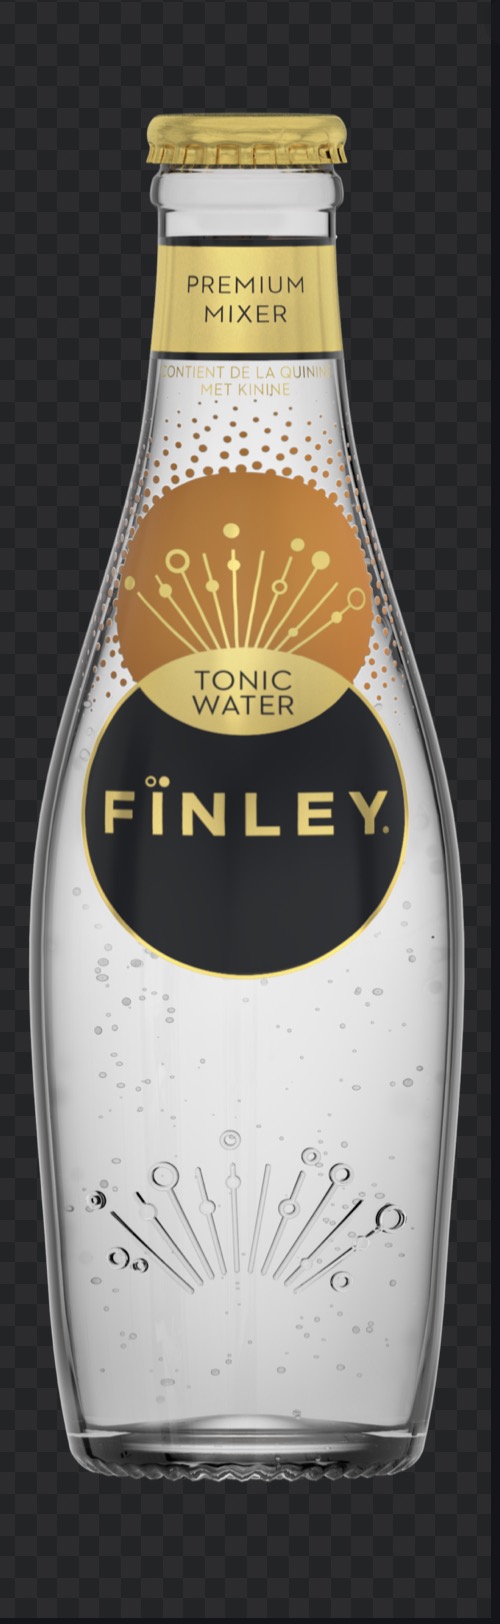 Finley tonic